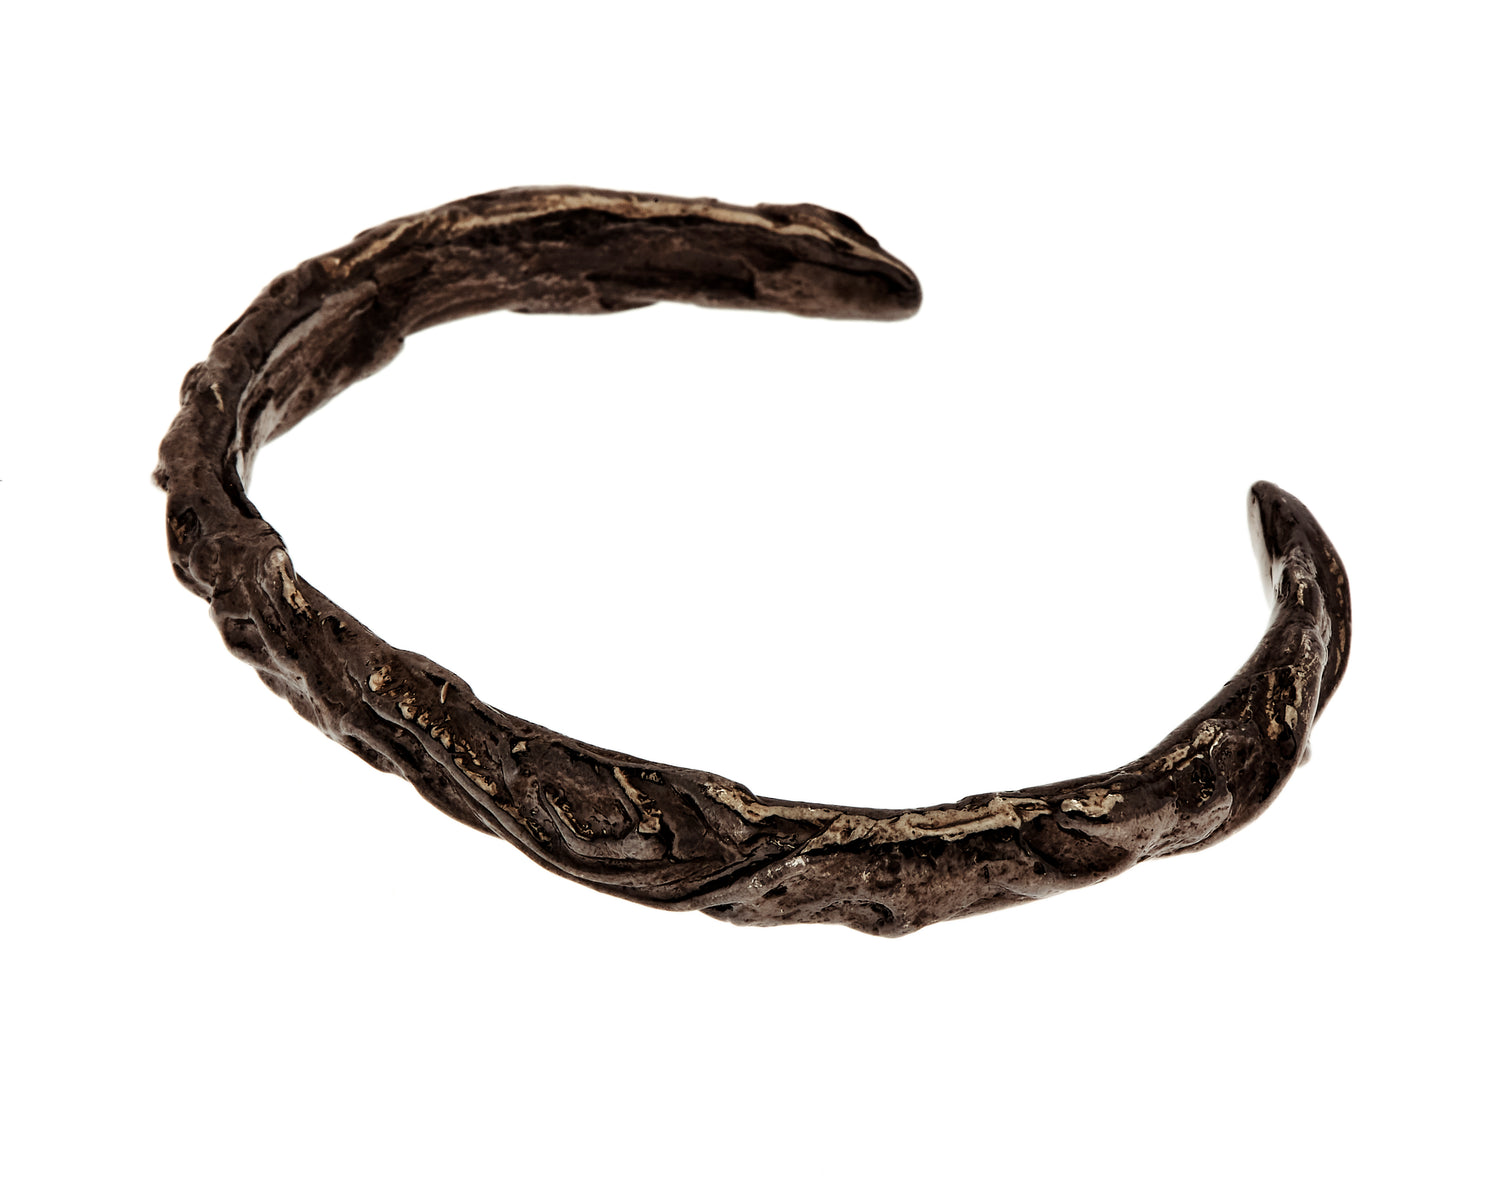 Black rhodium bracelet showing curvilinear designs